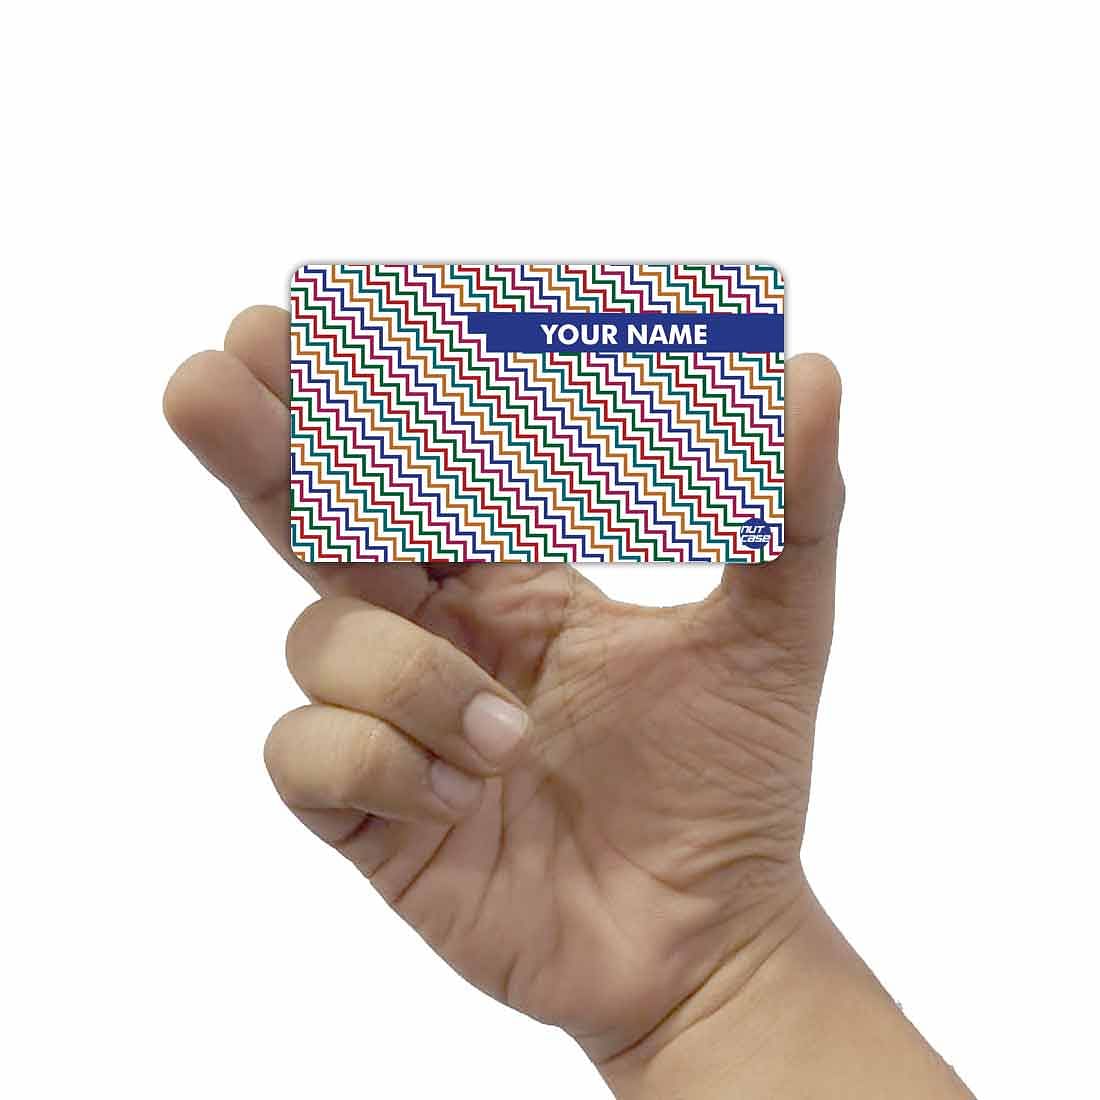 Customized NFC Digital Business Card - Multicolor Zig-Zag Lines Nutcase